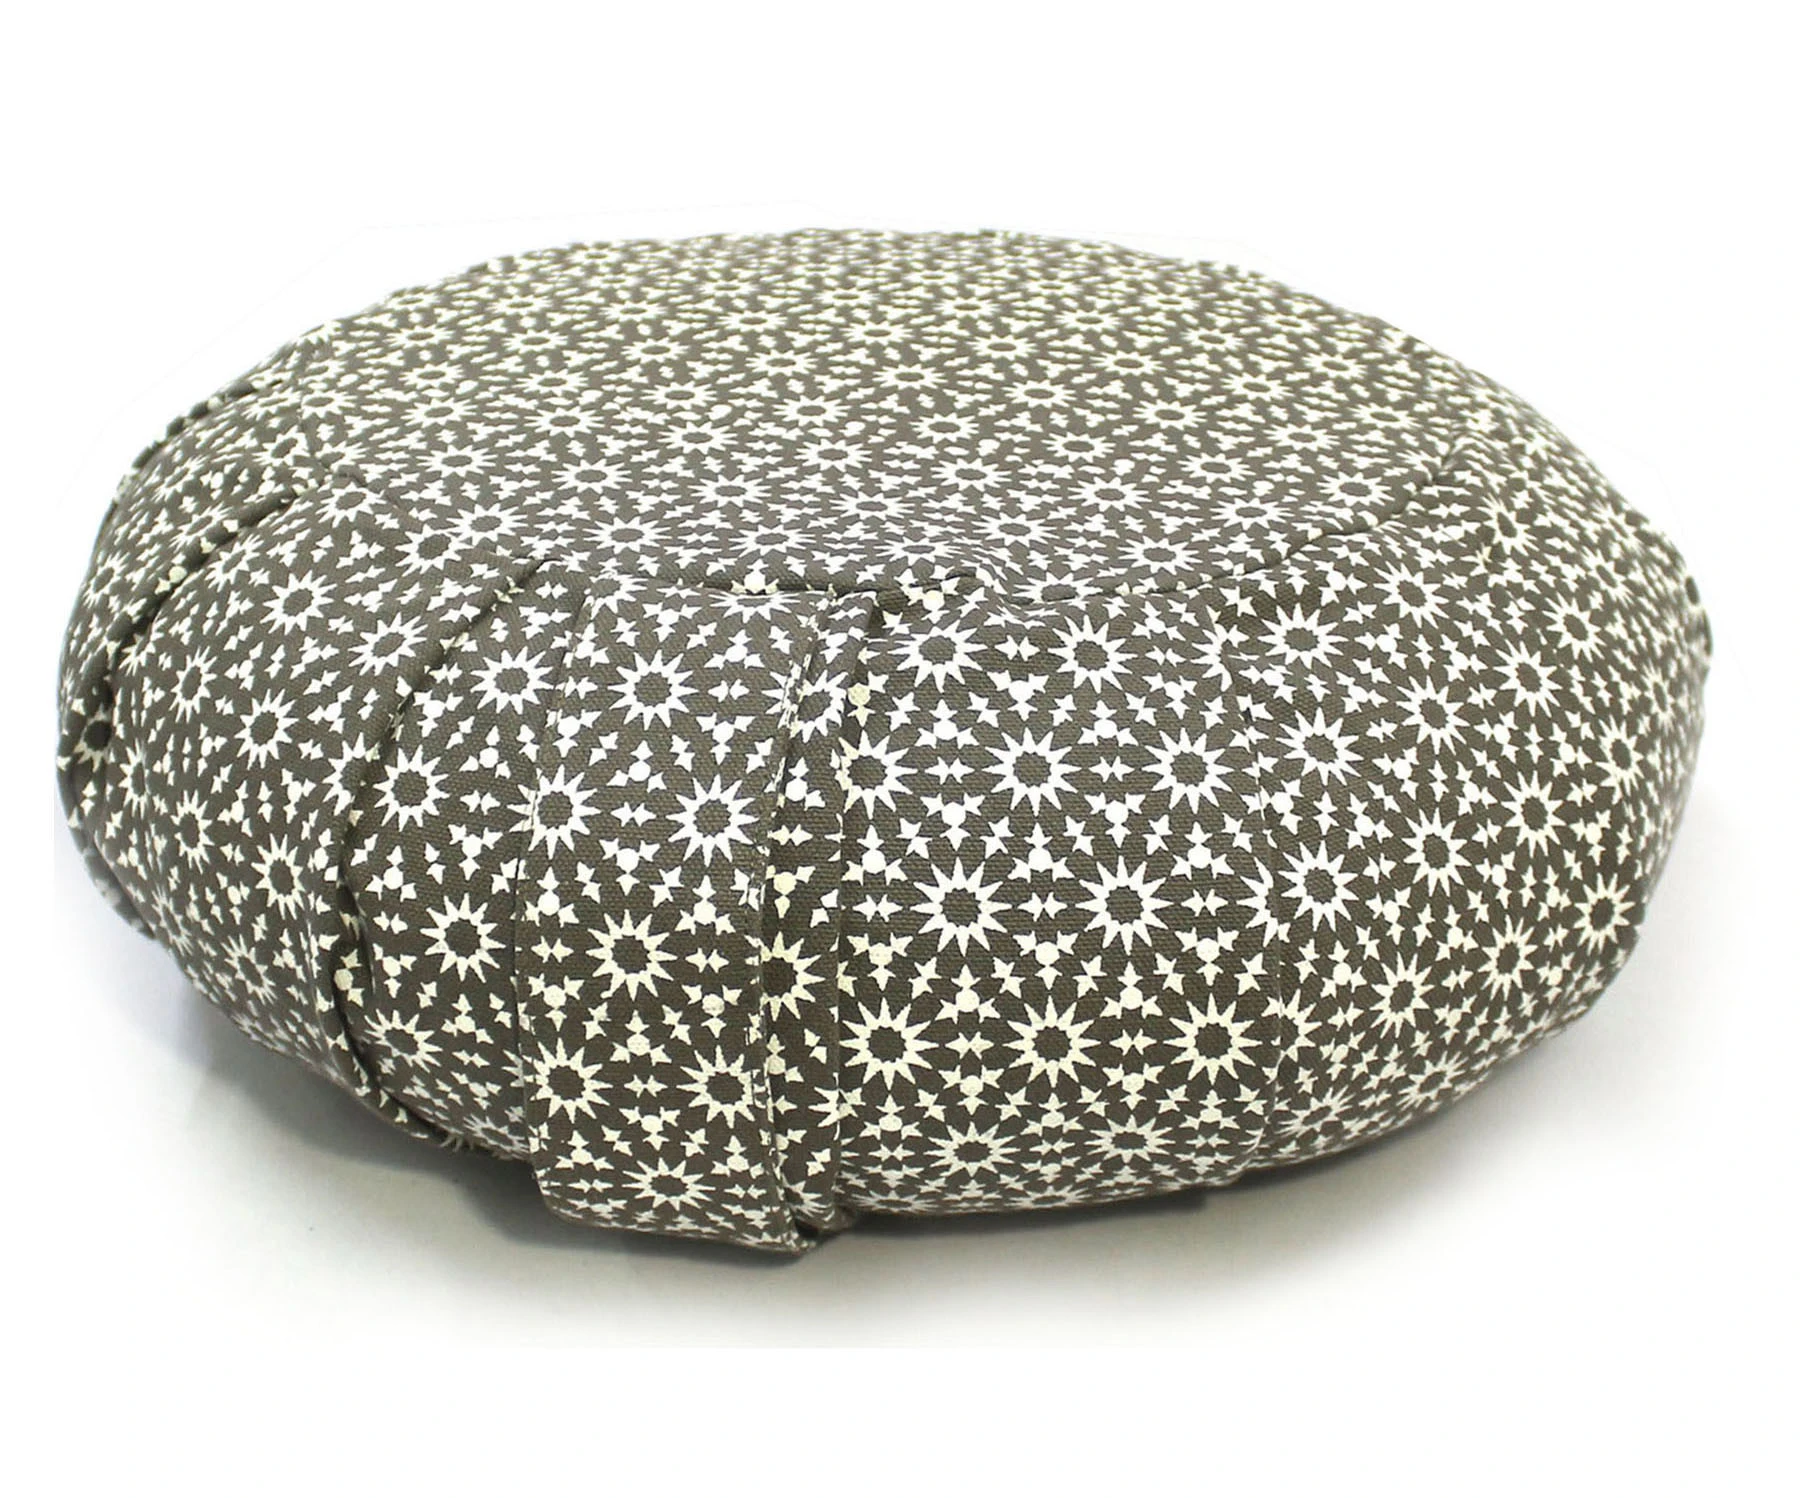 Buckwheat filled round and pleated organic certified meditation cushion zafu yoga pillow